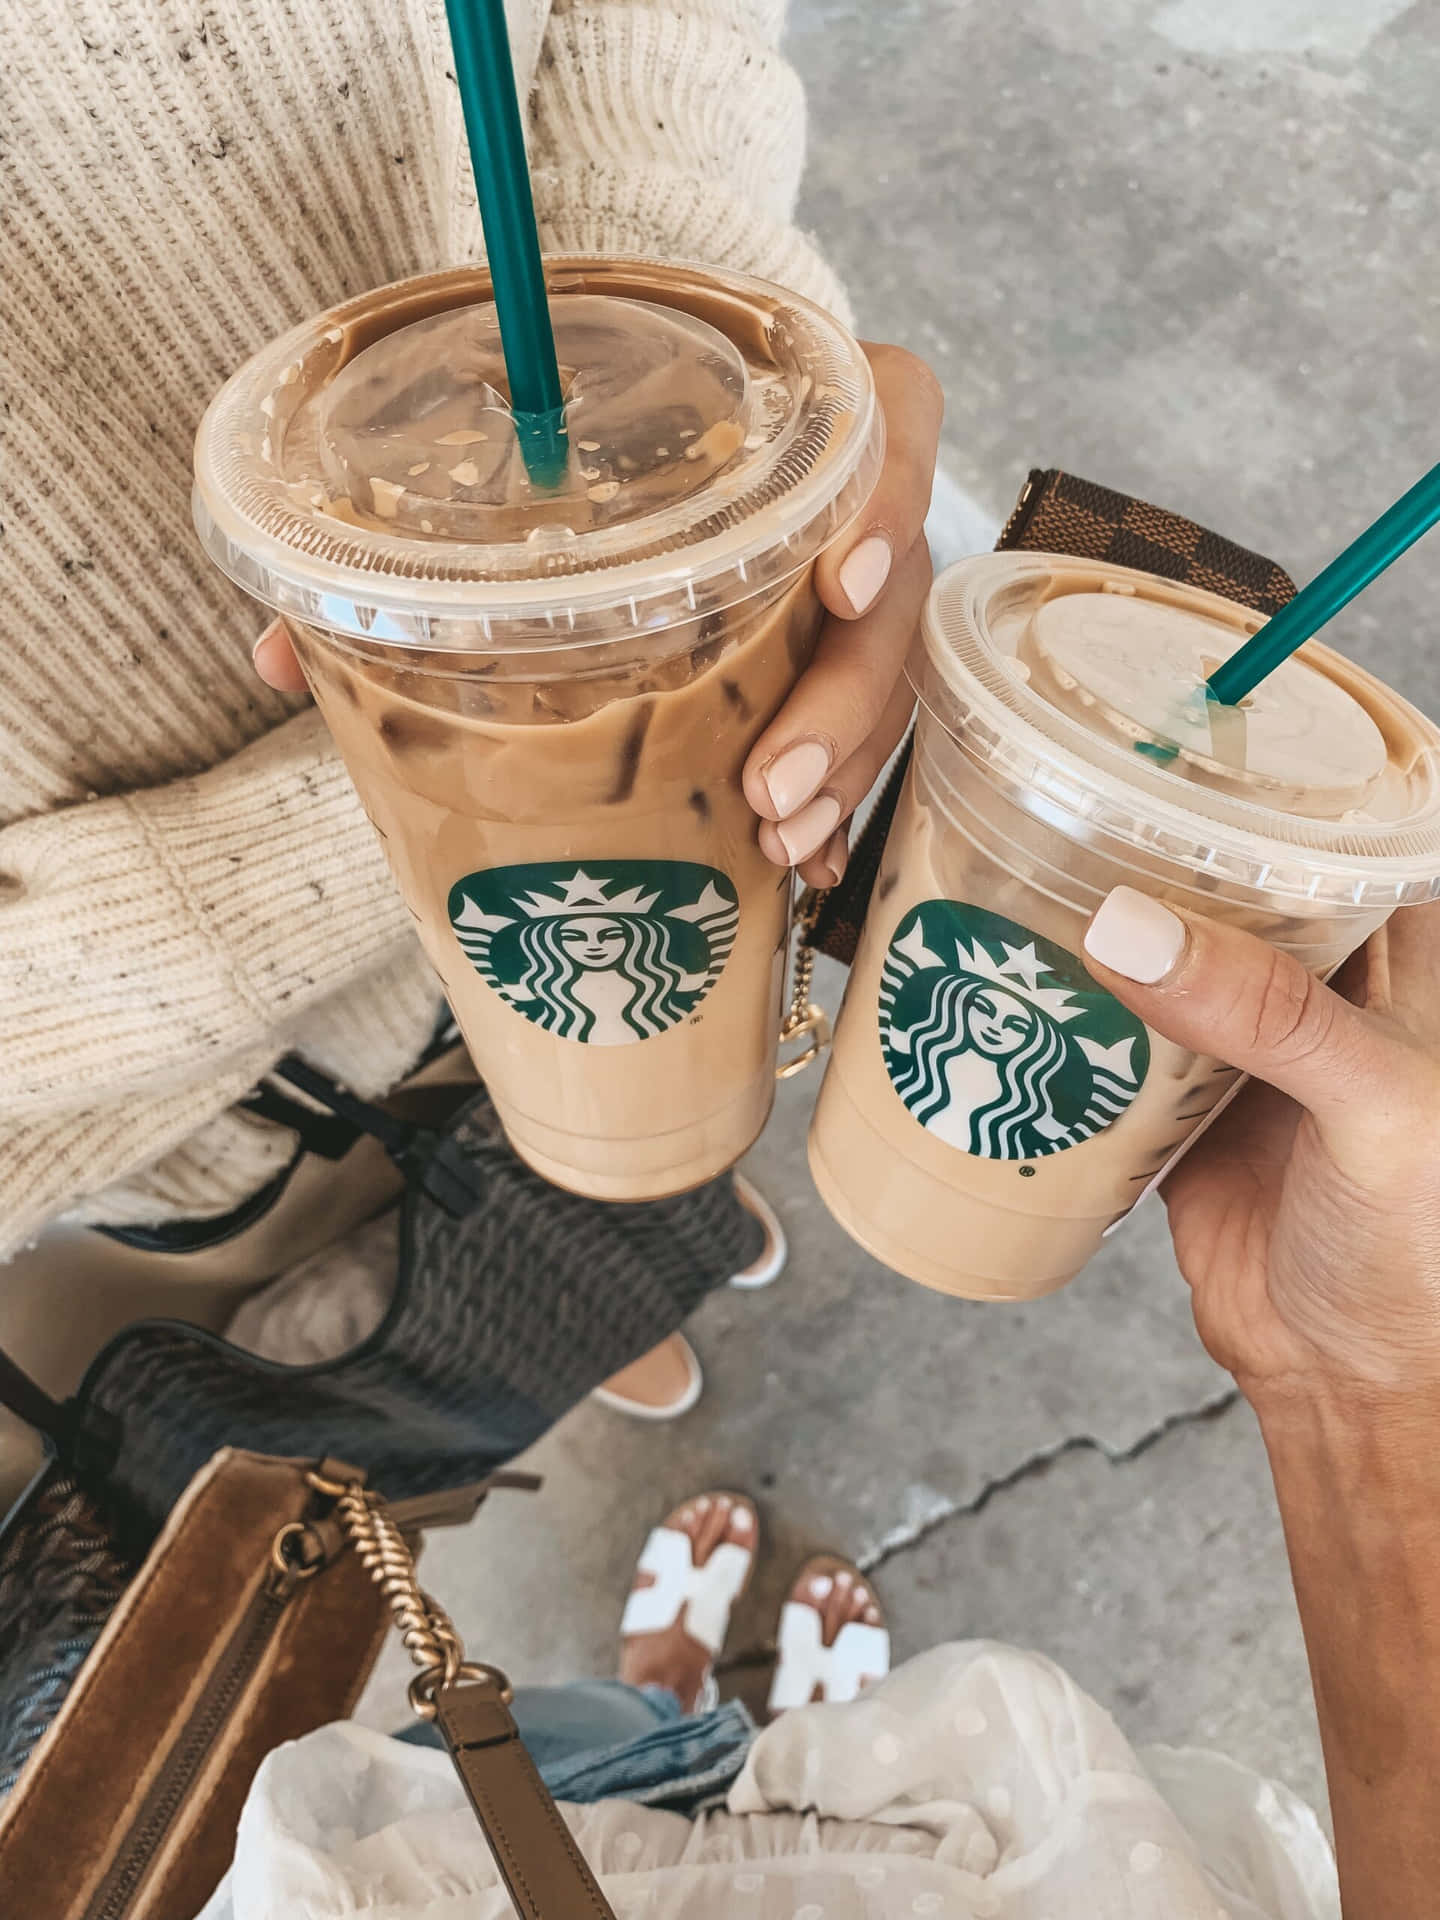 Refreshing Beverages from Starbucks